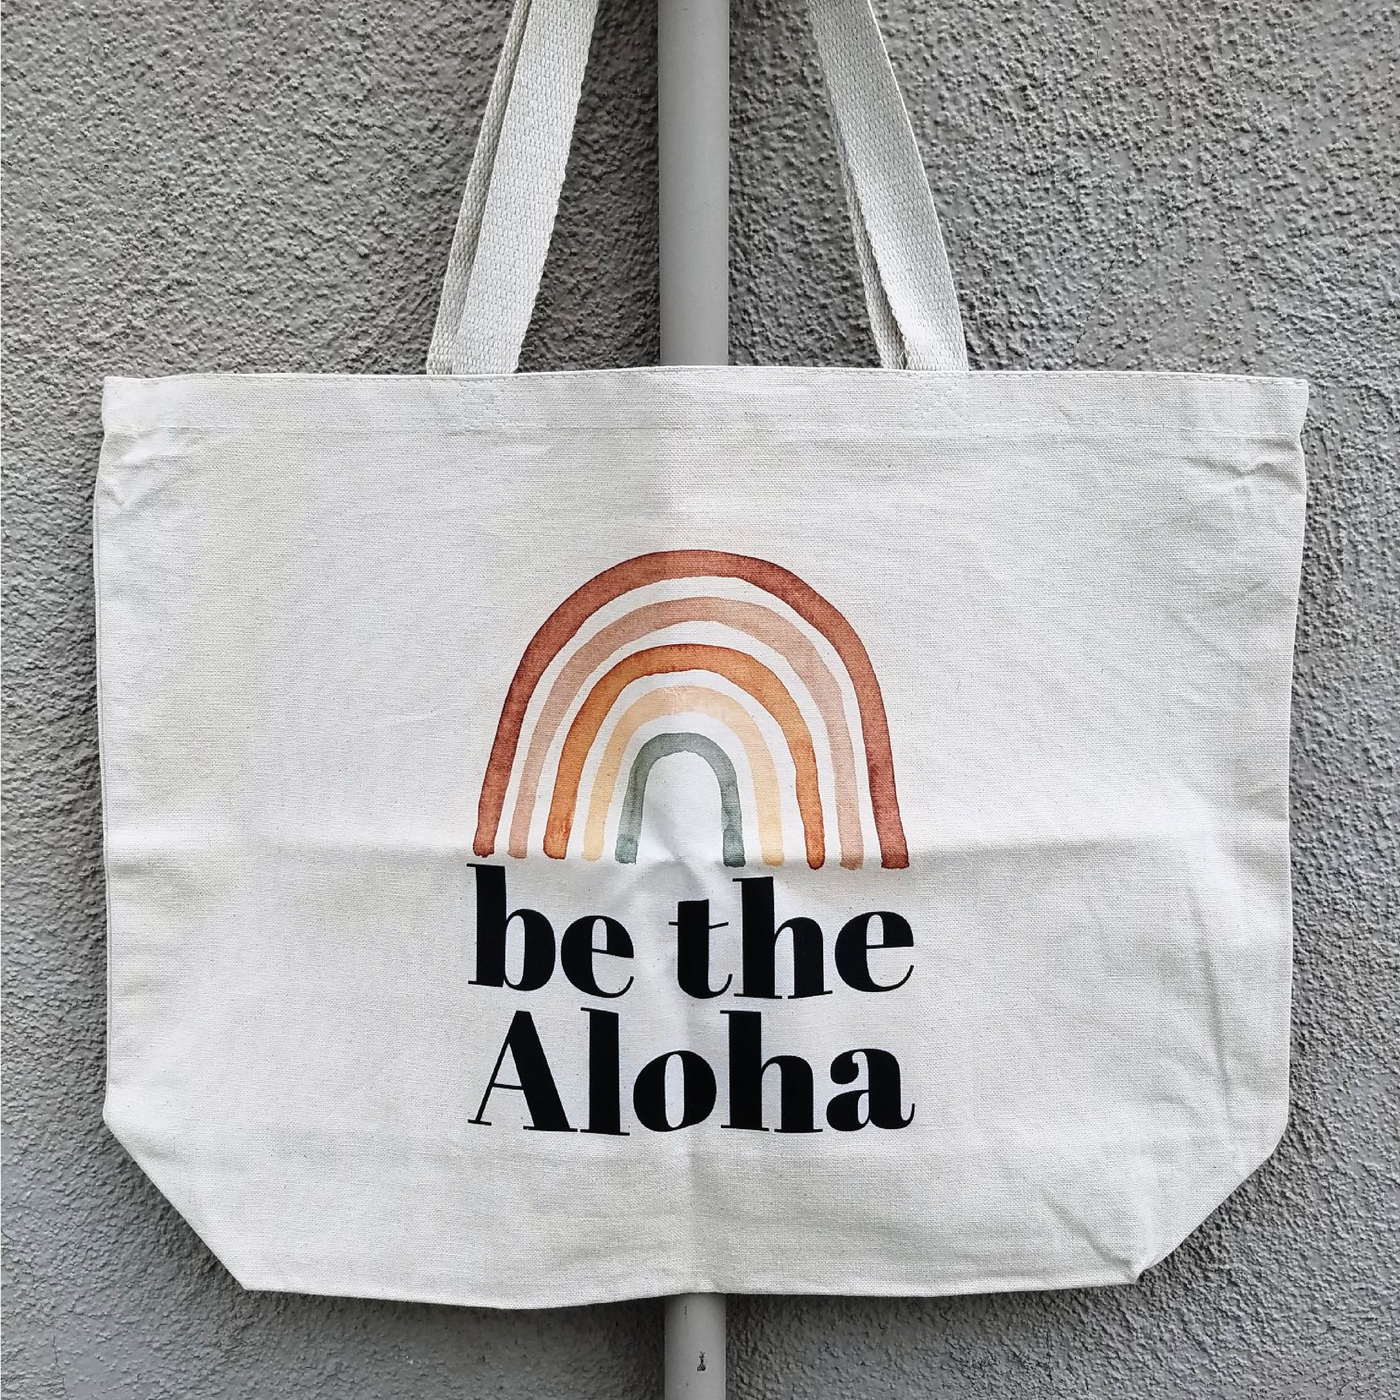 Be the Aloha Tote Bag